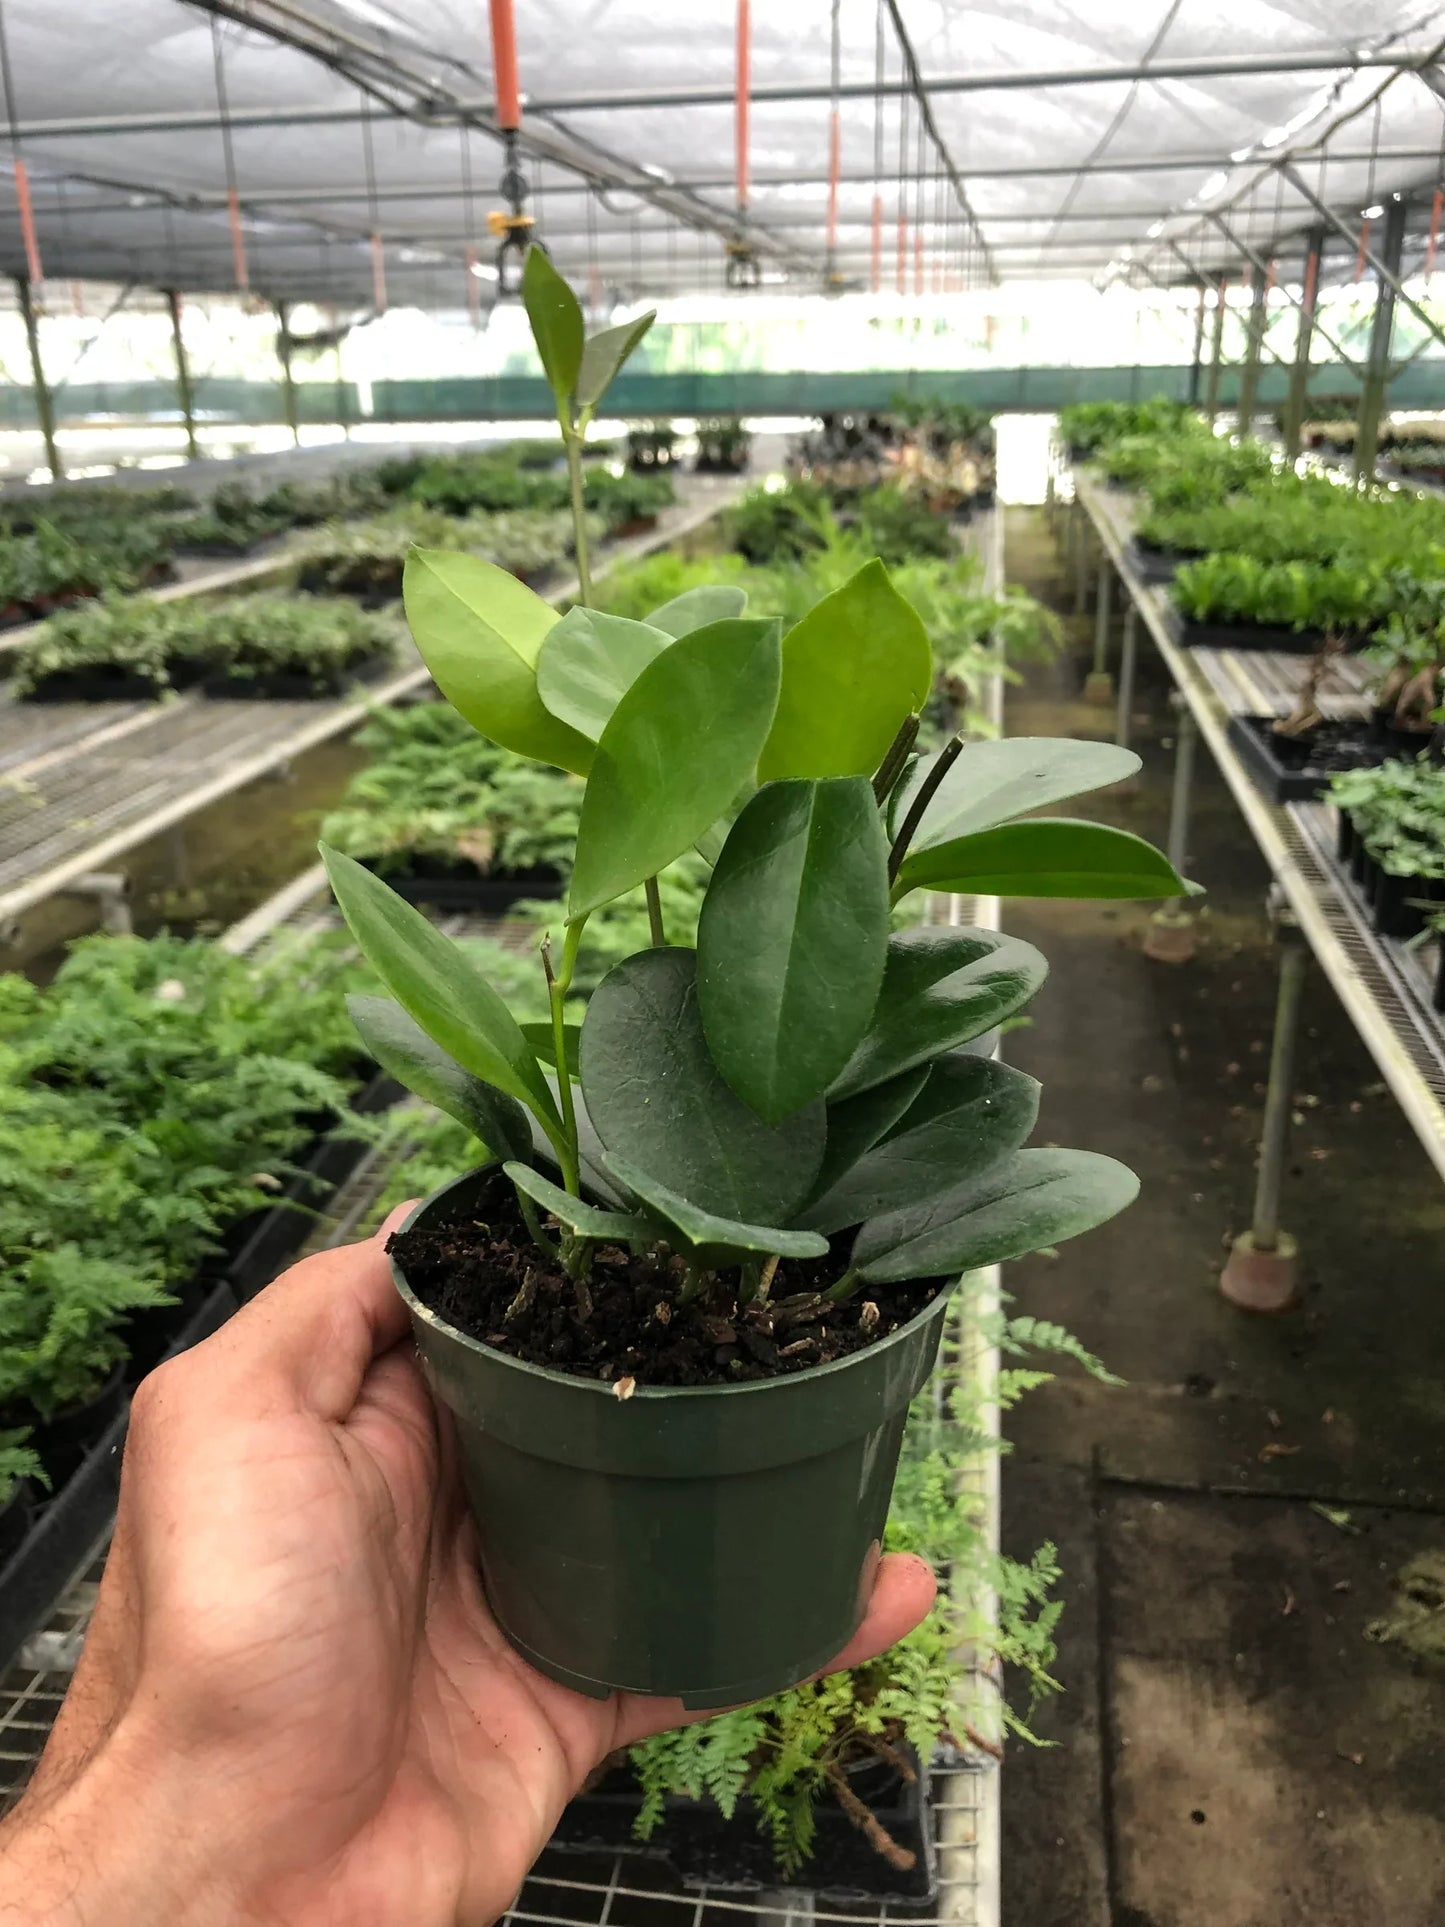 Hoya 'Australis' Wax Plant- 🐾 Pet Friendly - Tropical Houseplant